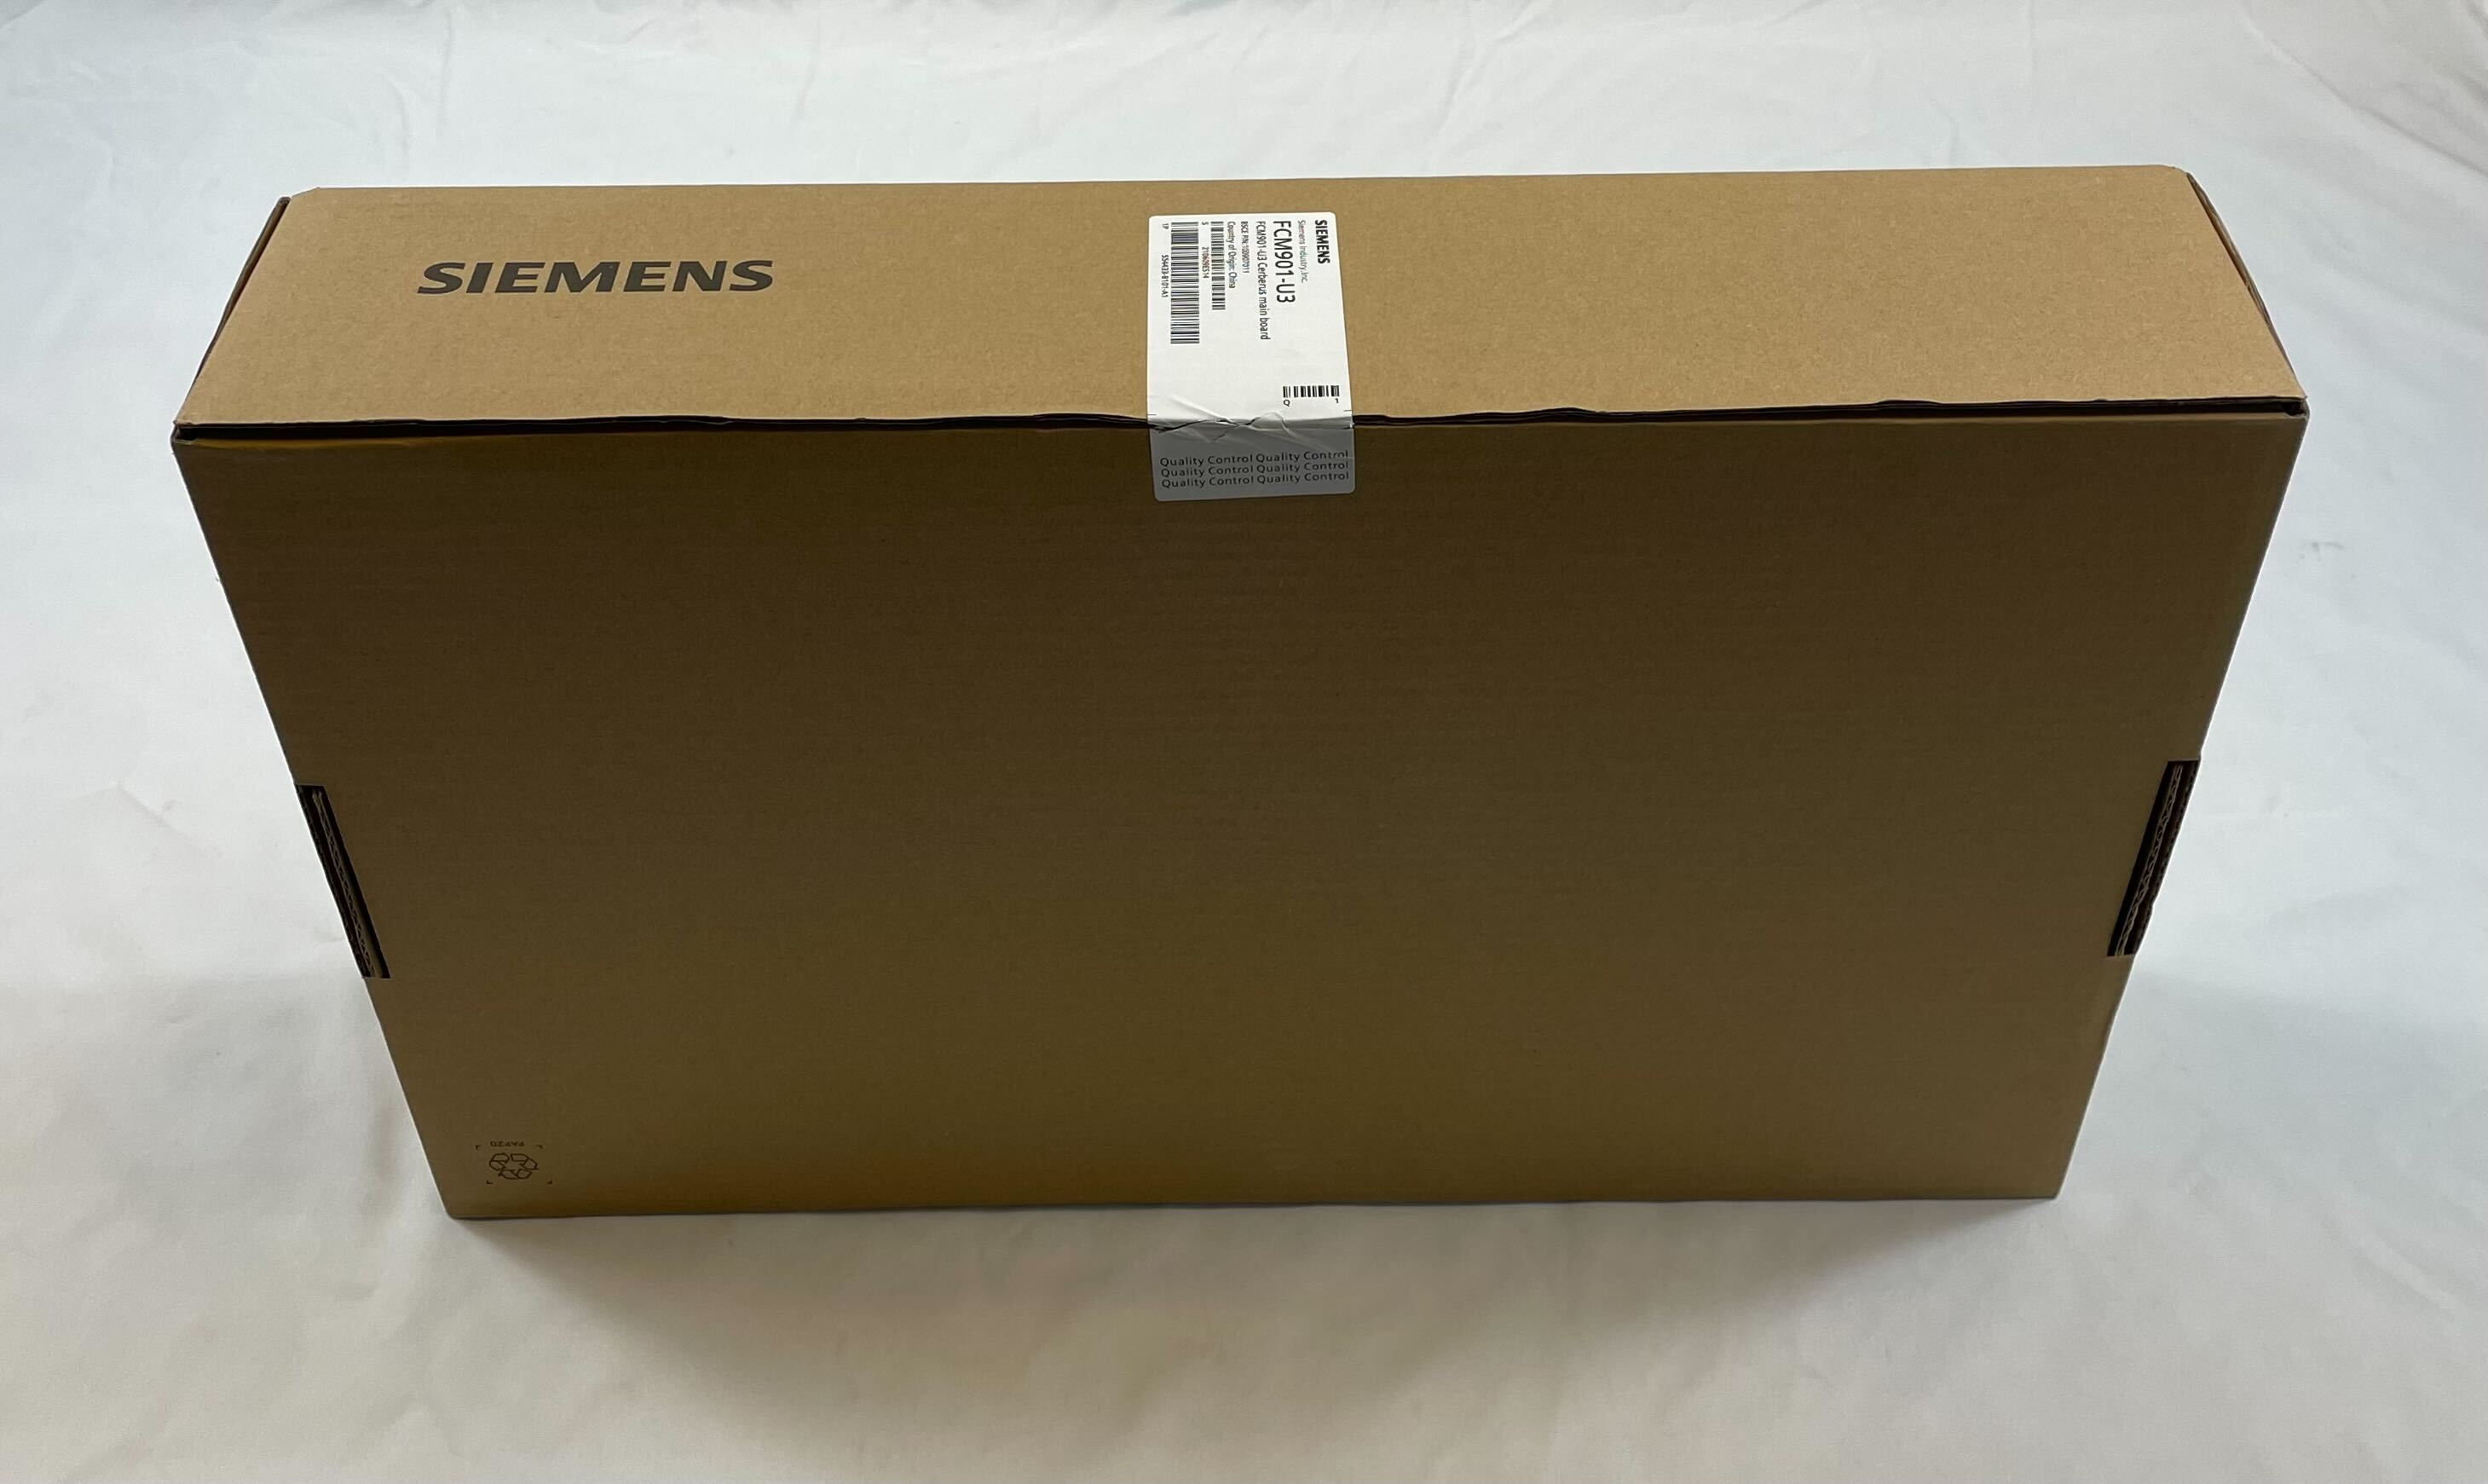 Siemens FCM901-U3